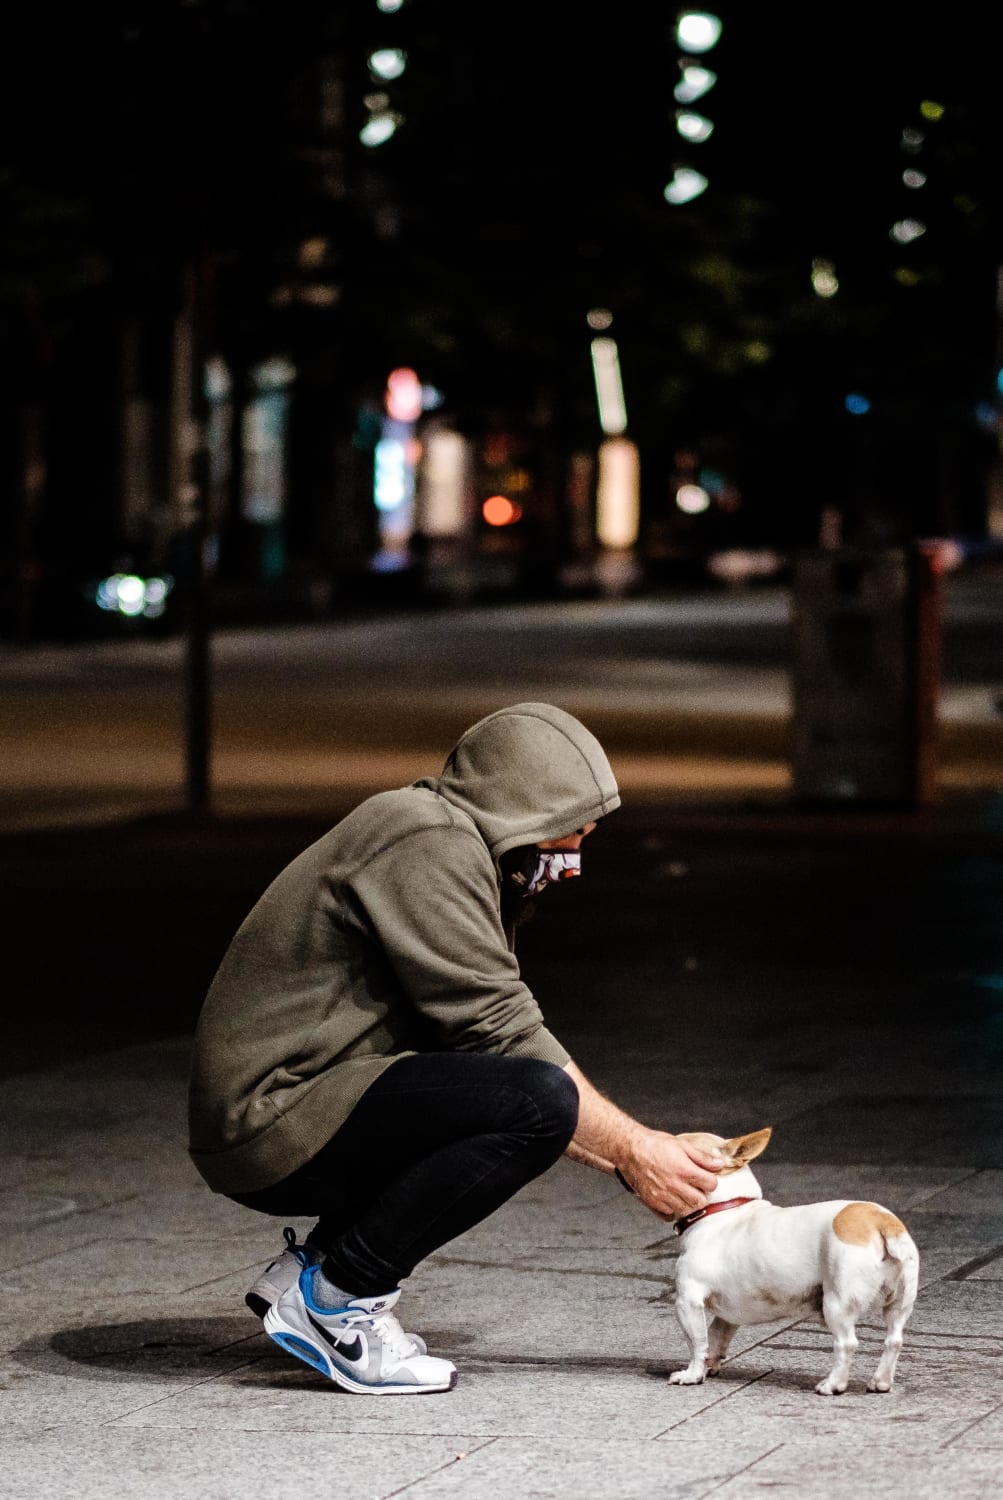 PsBattle: Man petting a Dog on the Street